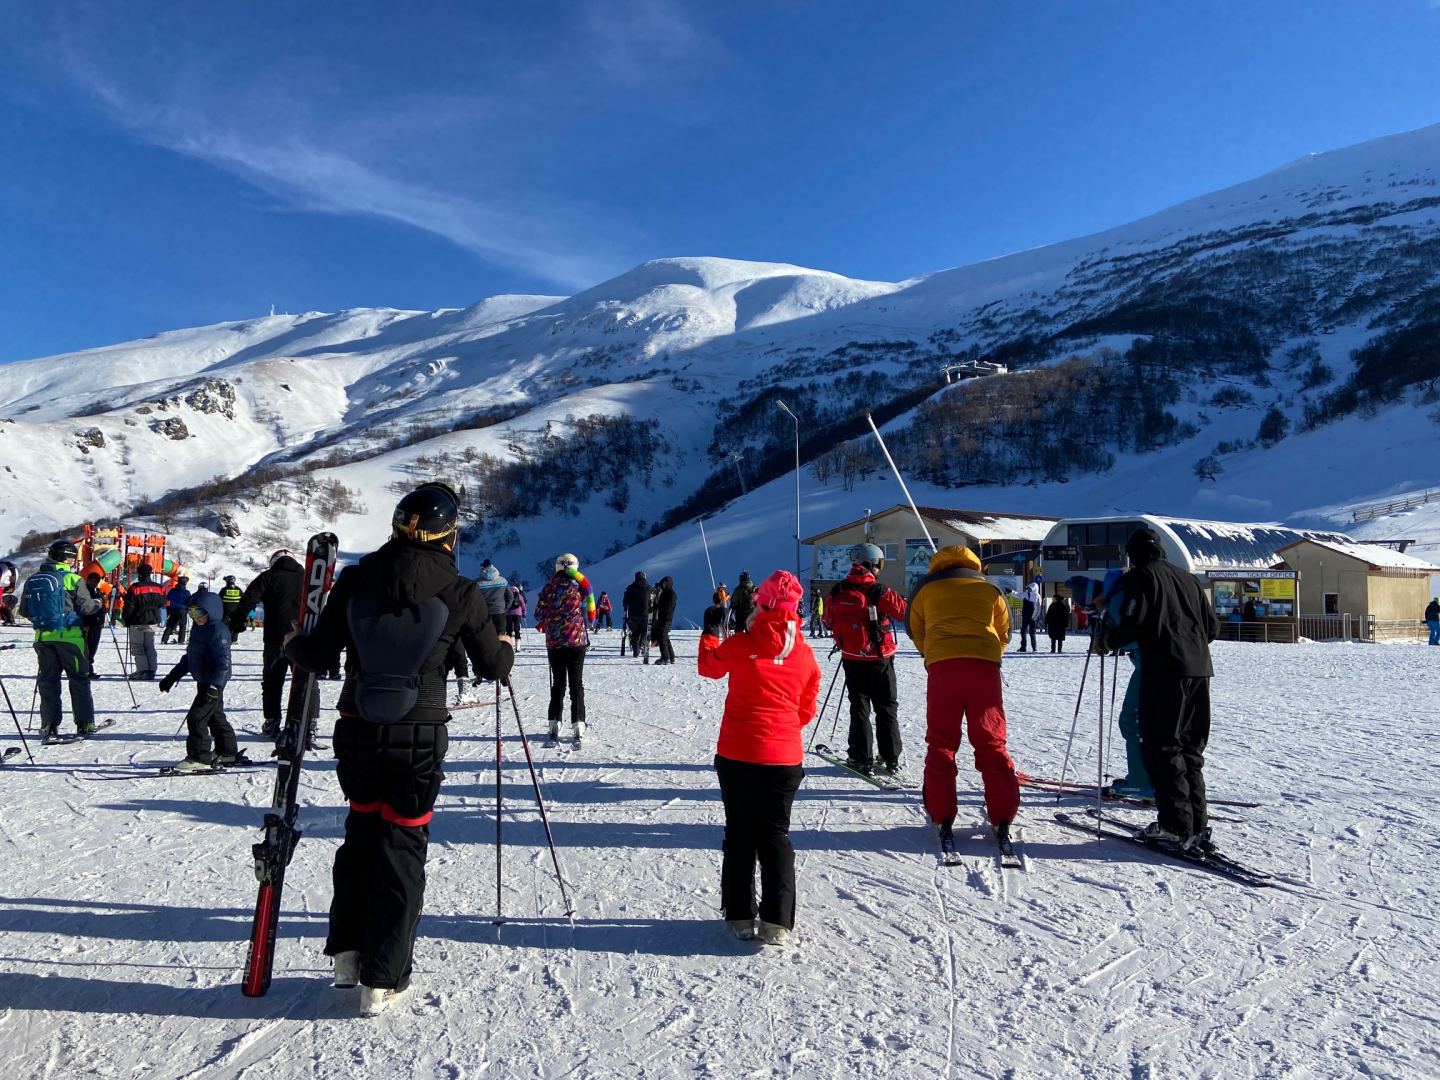 Georgia closes ski resorts to prevent coronavirus spread